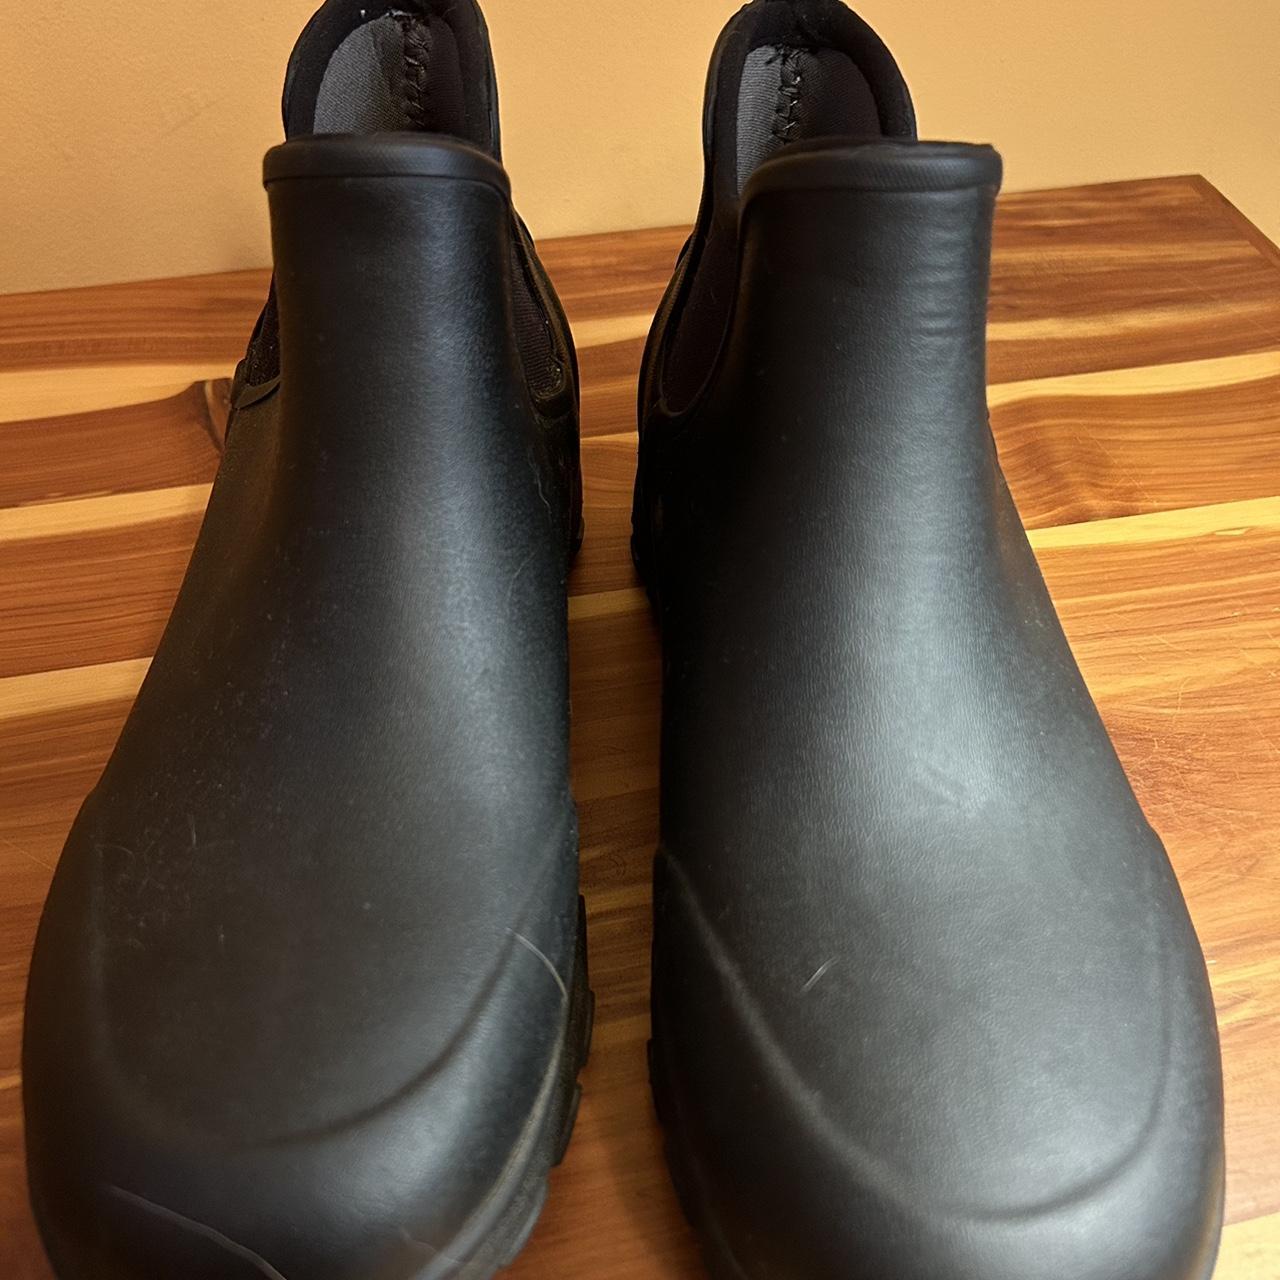 Bogs Women's Black Boots (2)